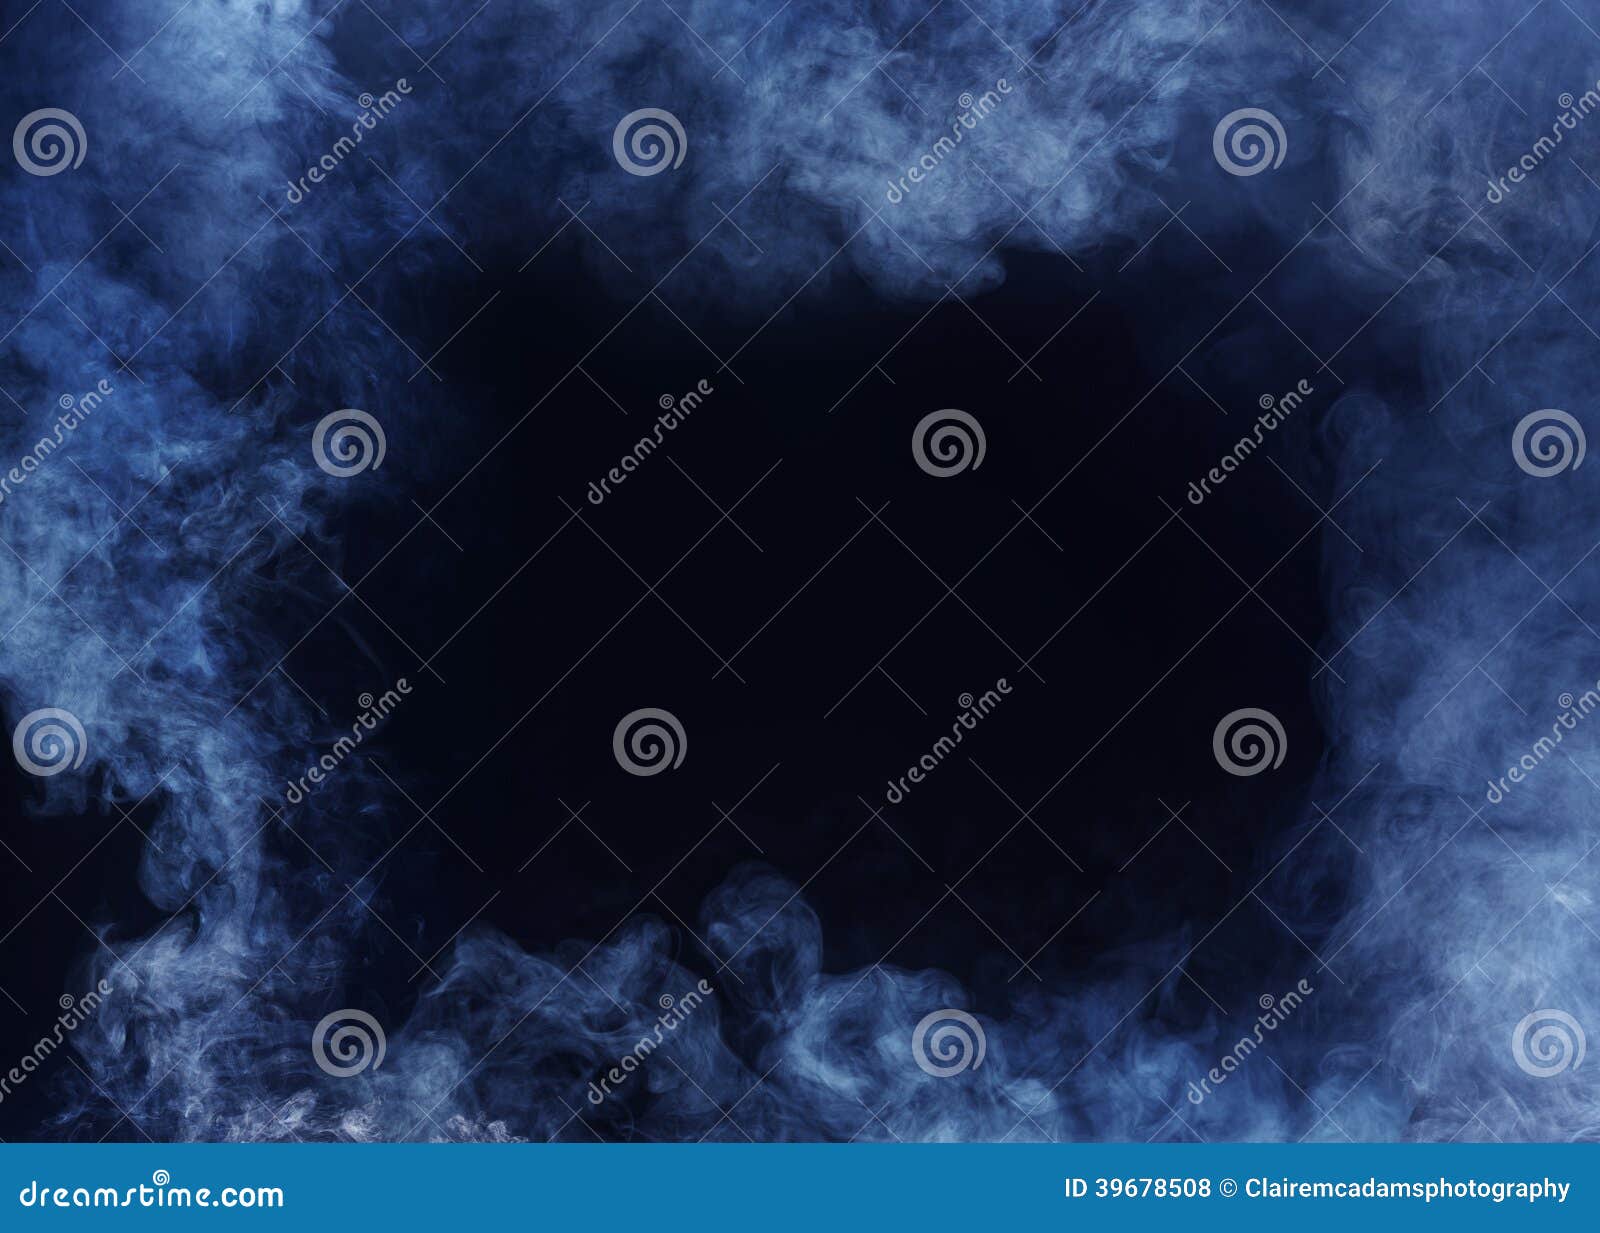 blue horizontal smoke frame on black background